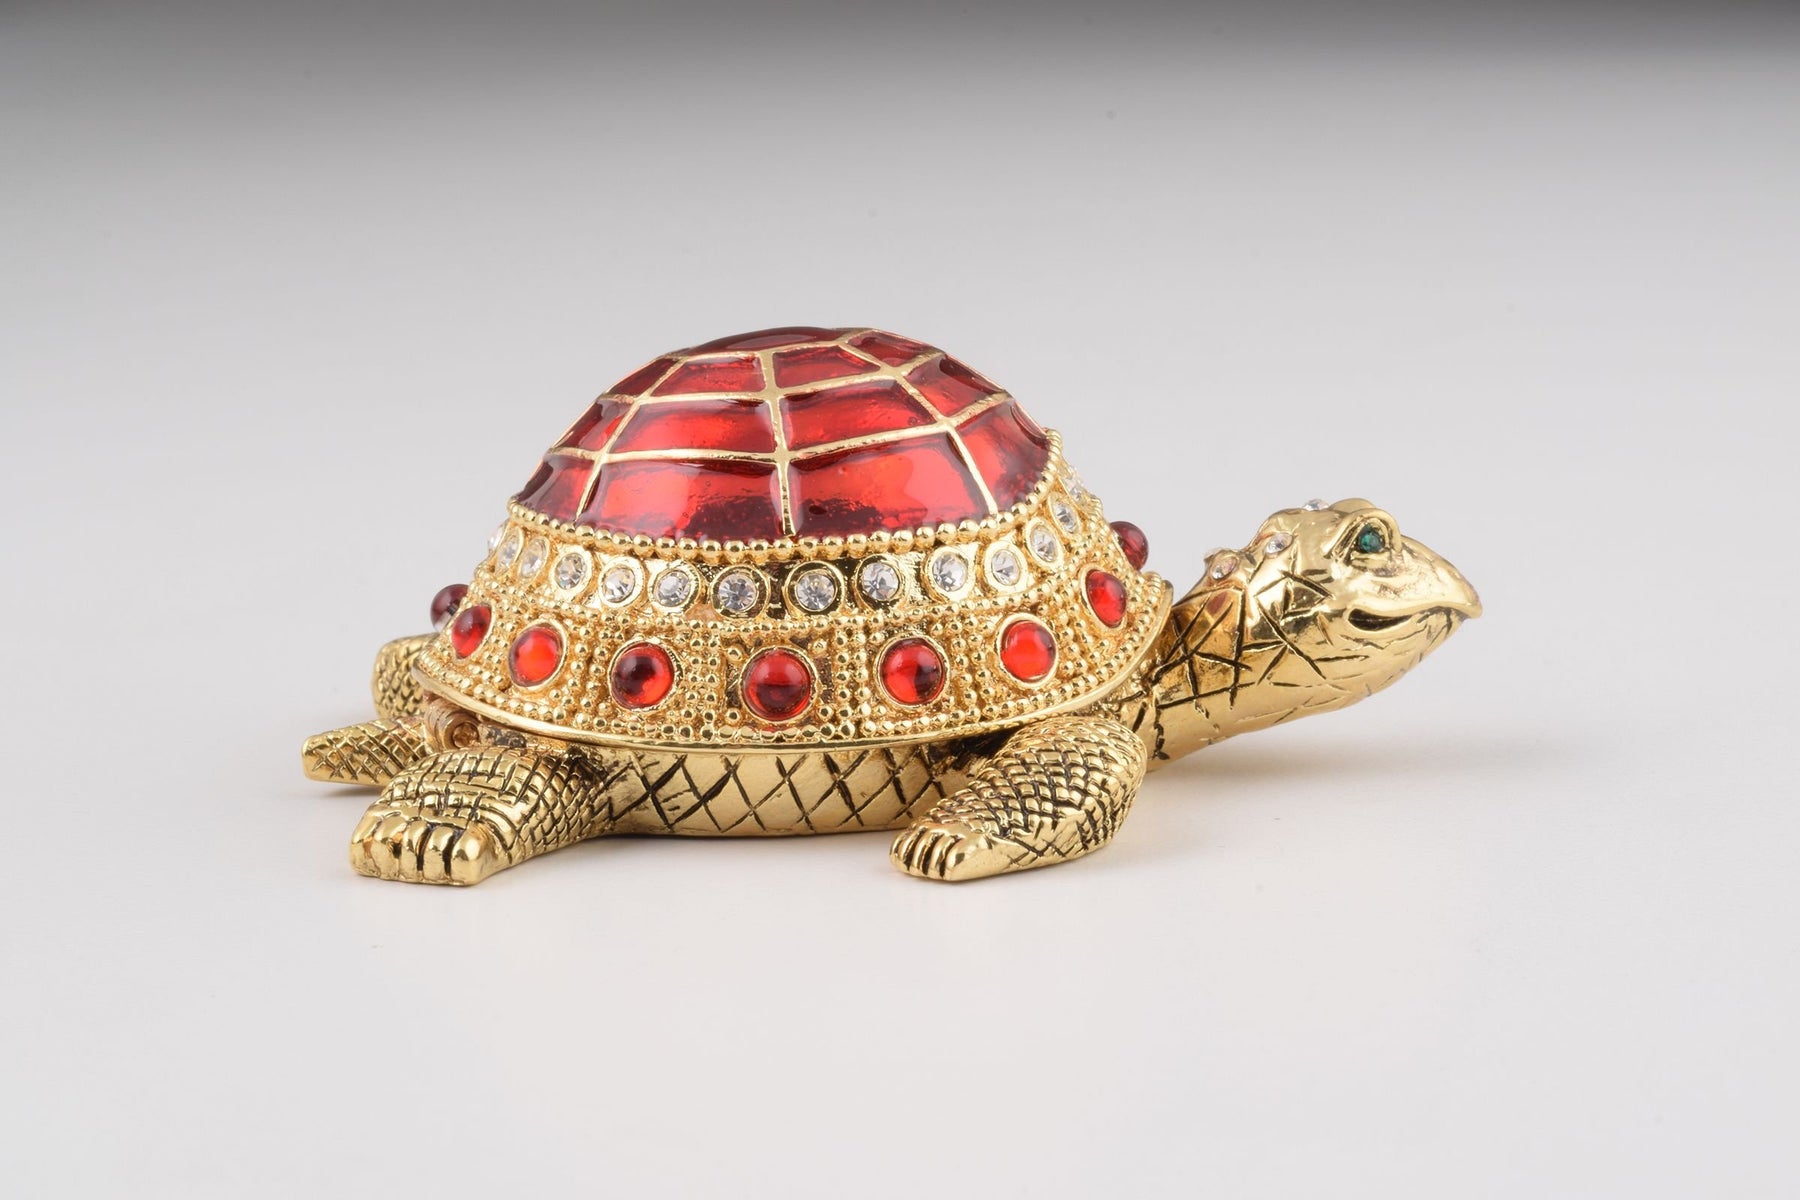 Keren Kopal Red Turtle  51.50